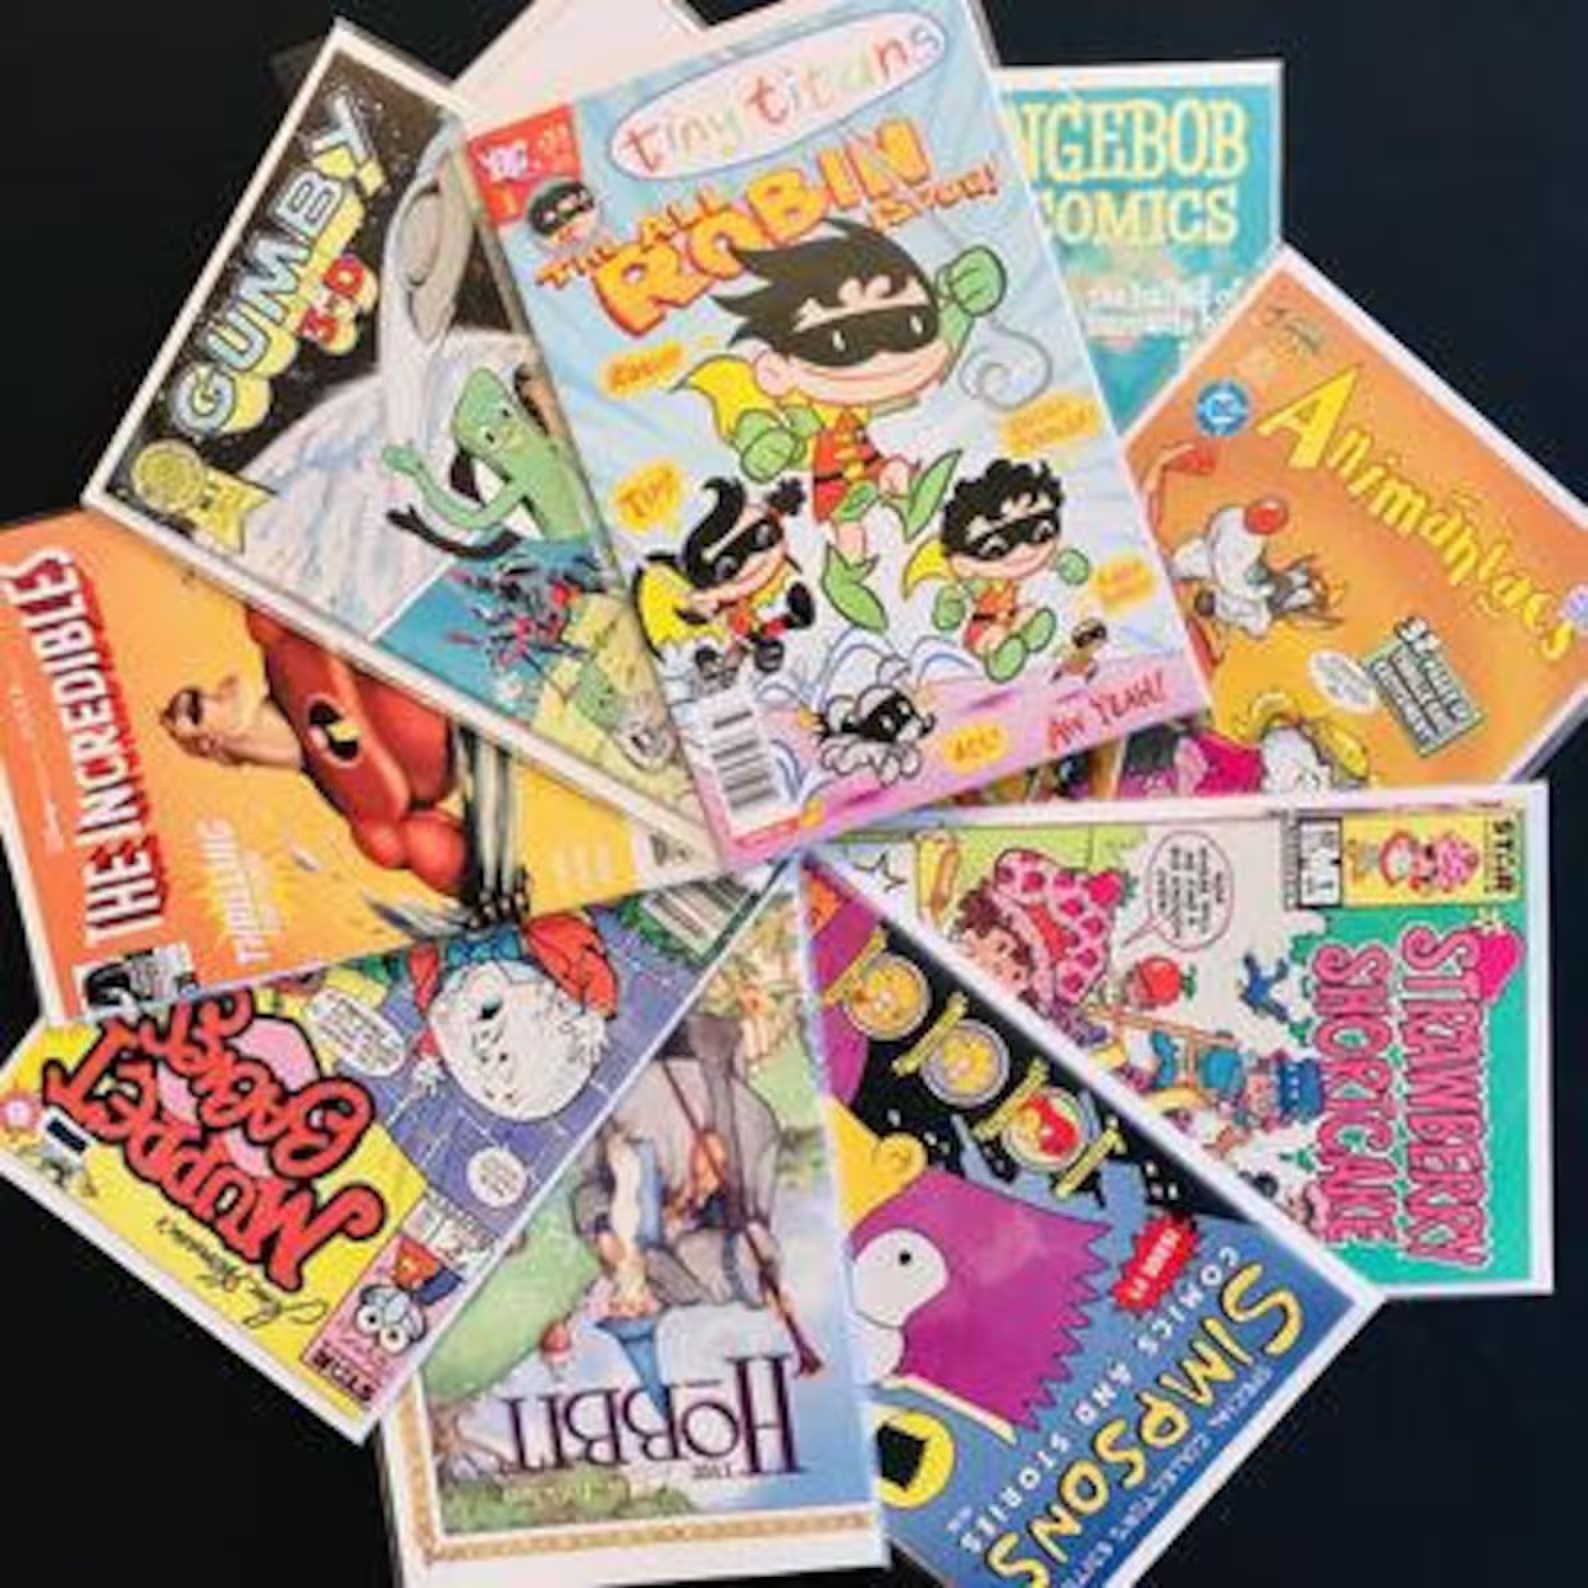 A selection of kid-friendly comics